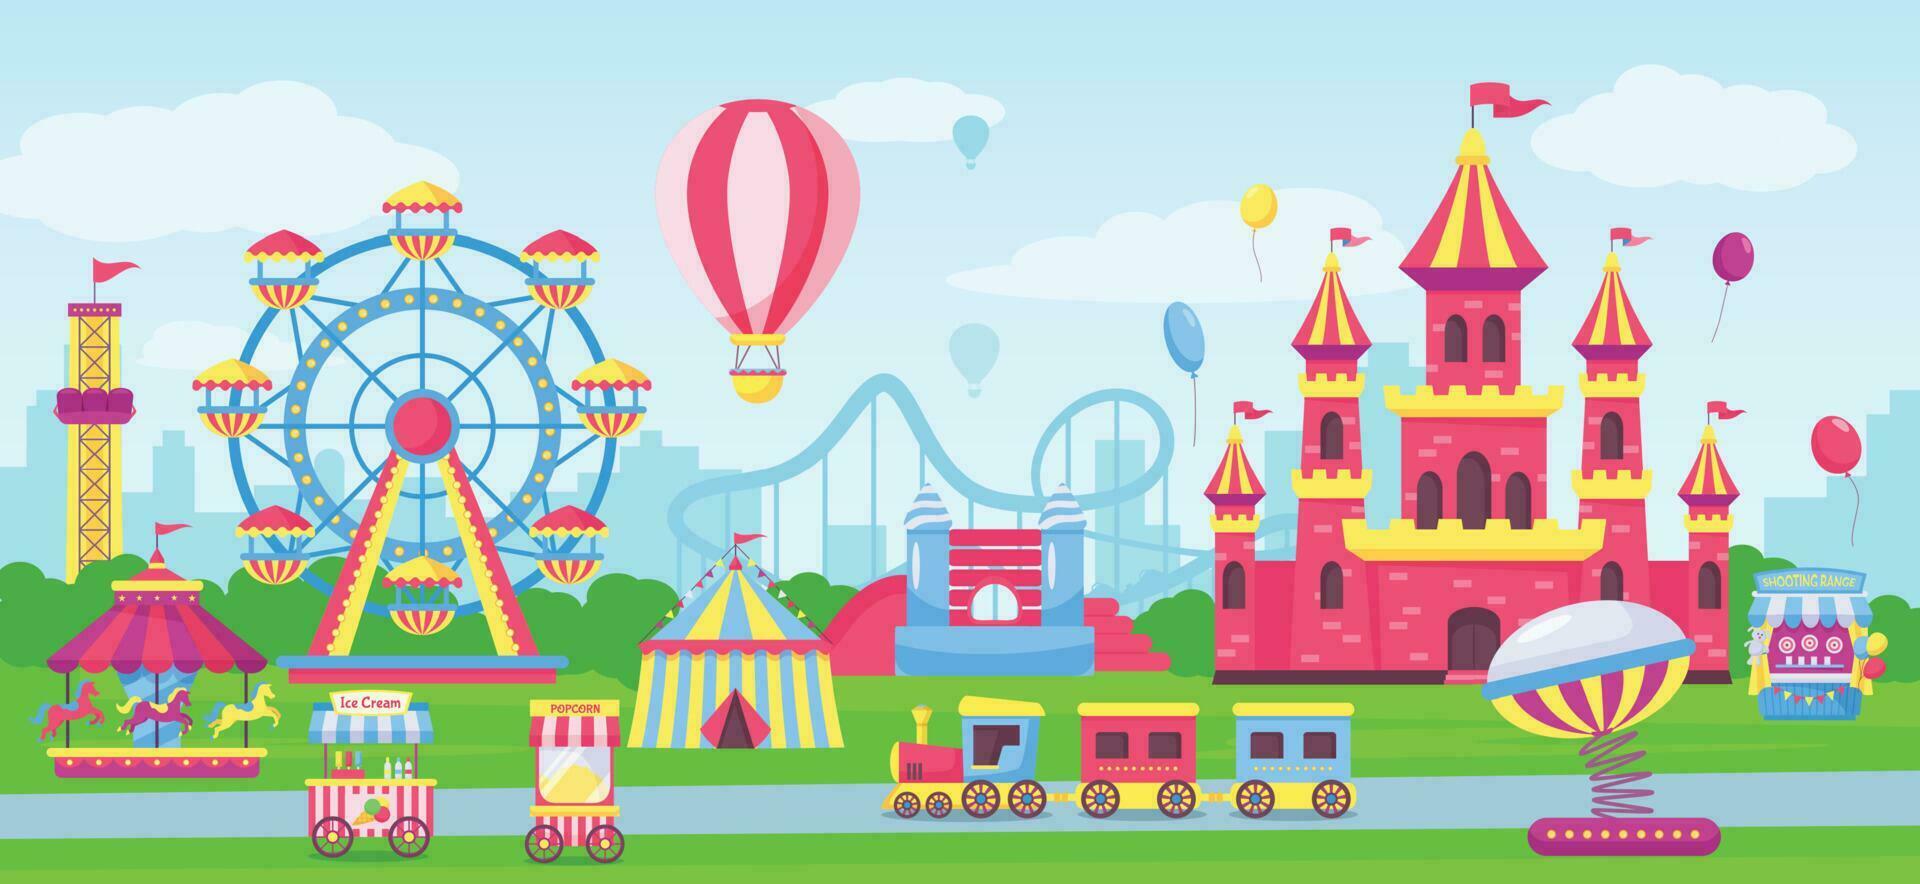 Amusement park with funfair attractions, carnival fairground rides. Cartoon circus tent, children castle, rollercoaster Vector illustration